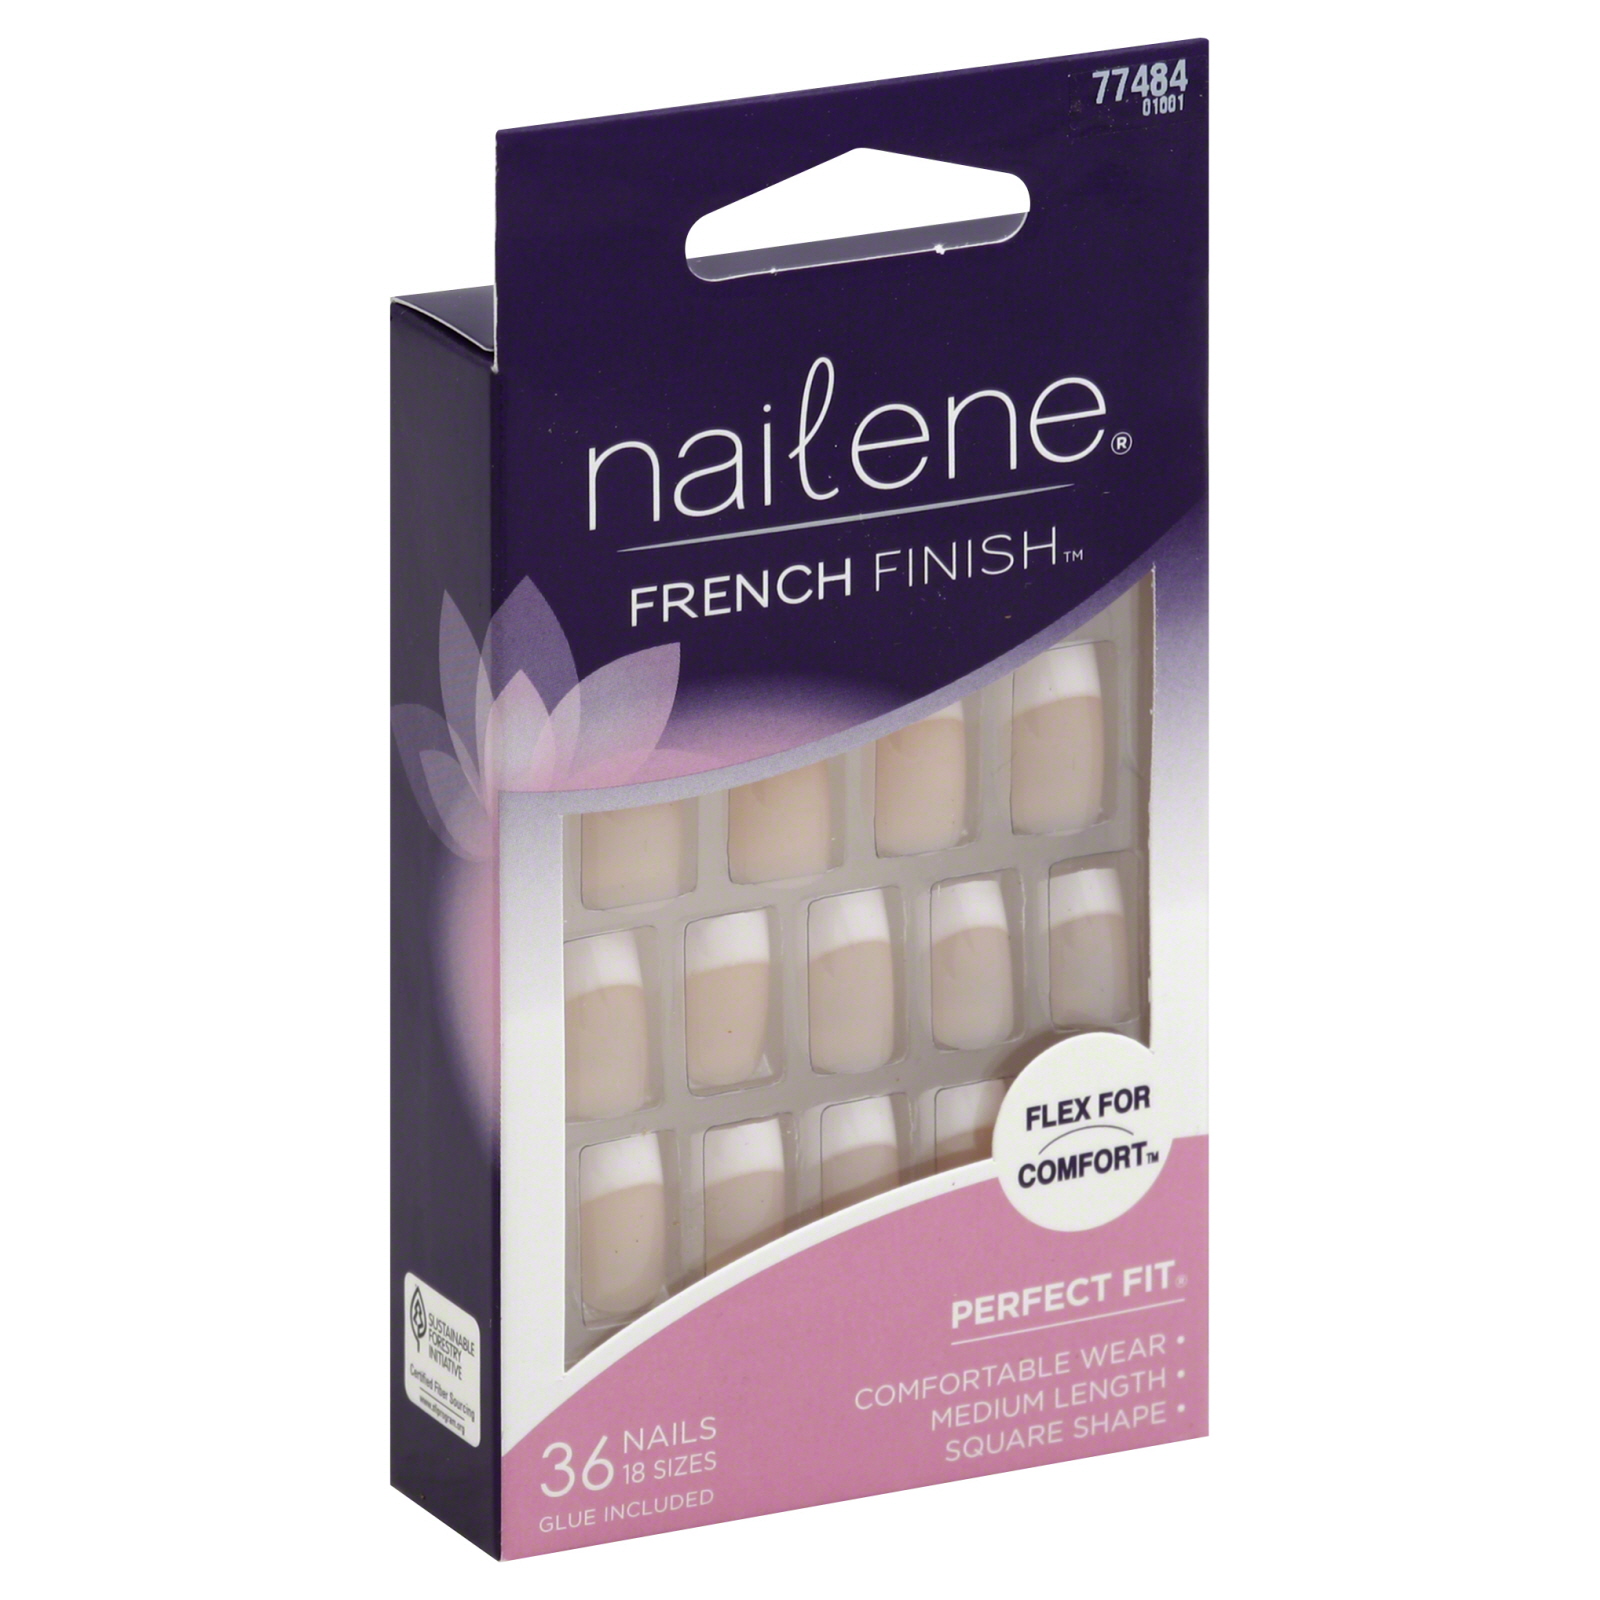 Nailene Flex for Comfort Pink Fuzzy Edge French Nail Kit - 36 Nail Kit